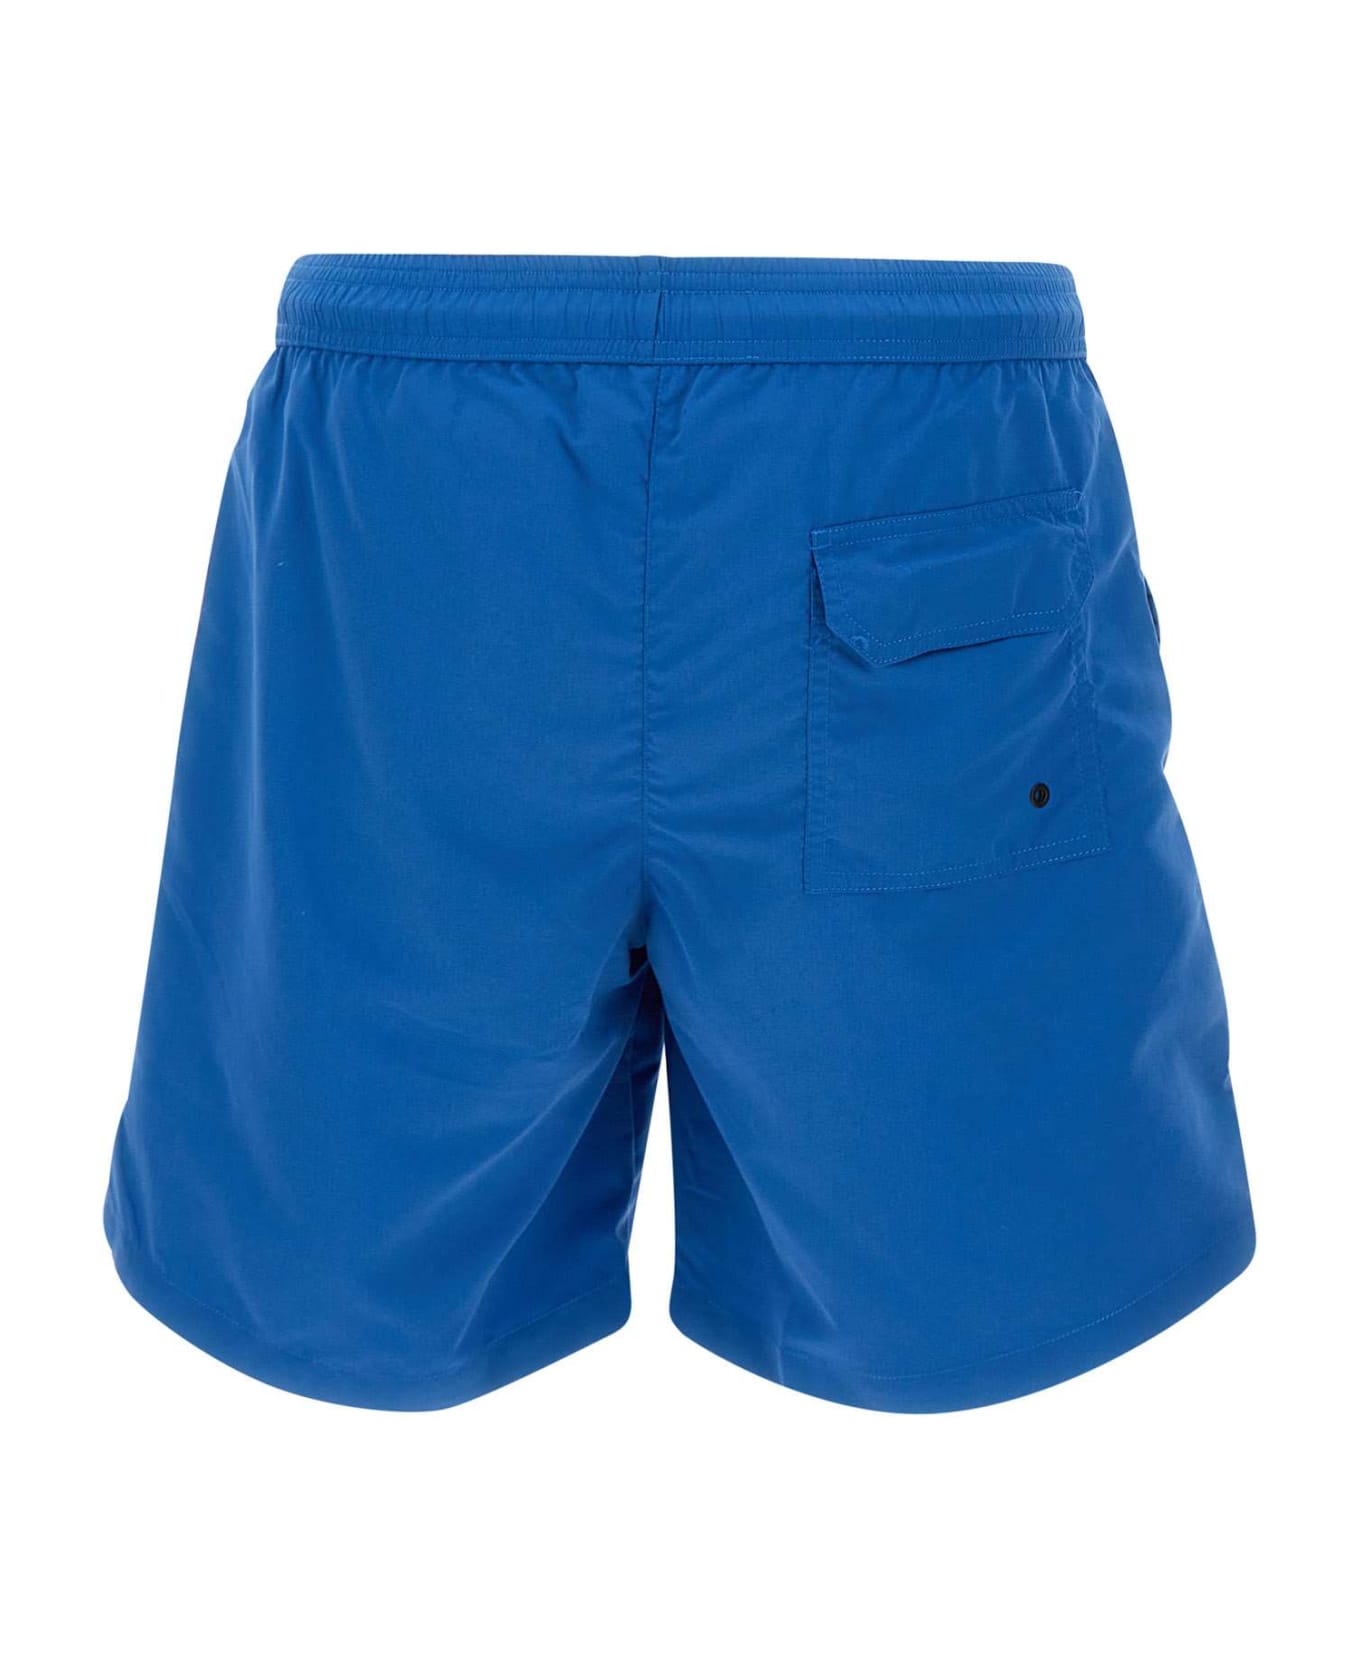 HERON PRESTON Swimshorts - BLUE